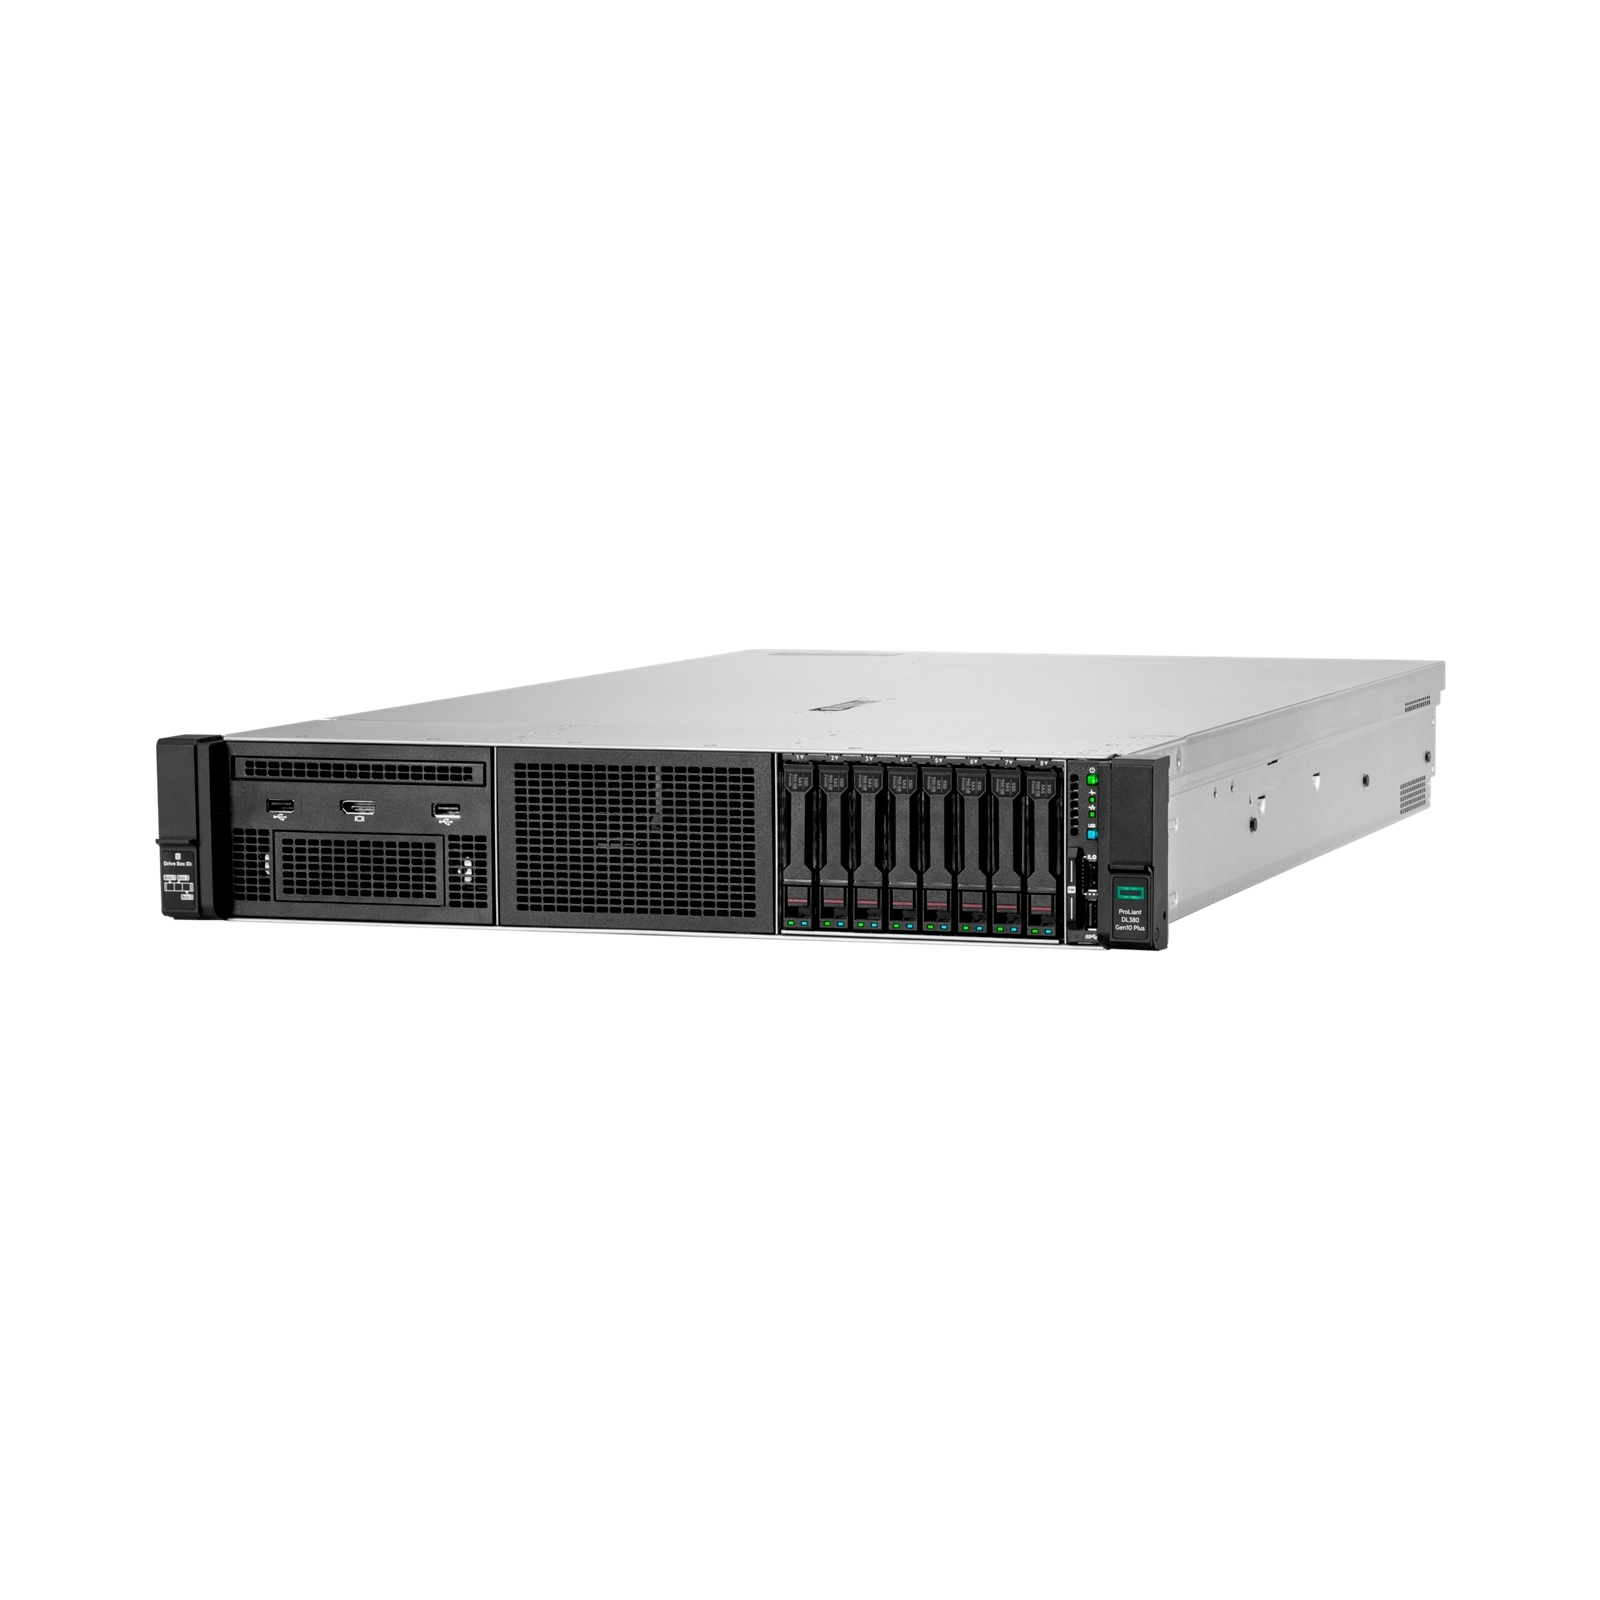 Сервер Hewlett Packard Enterprise SERVER DL380 G10+ 5315Y/MR416I-P NC SVR P55248-B21 HPE (P55248-B21) изображение 4